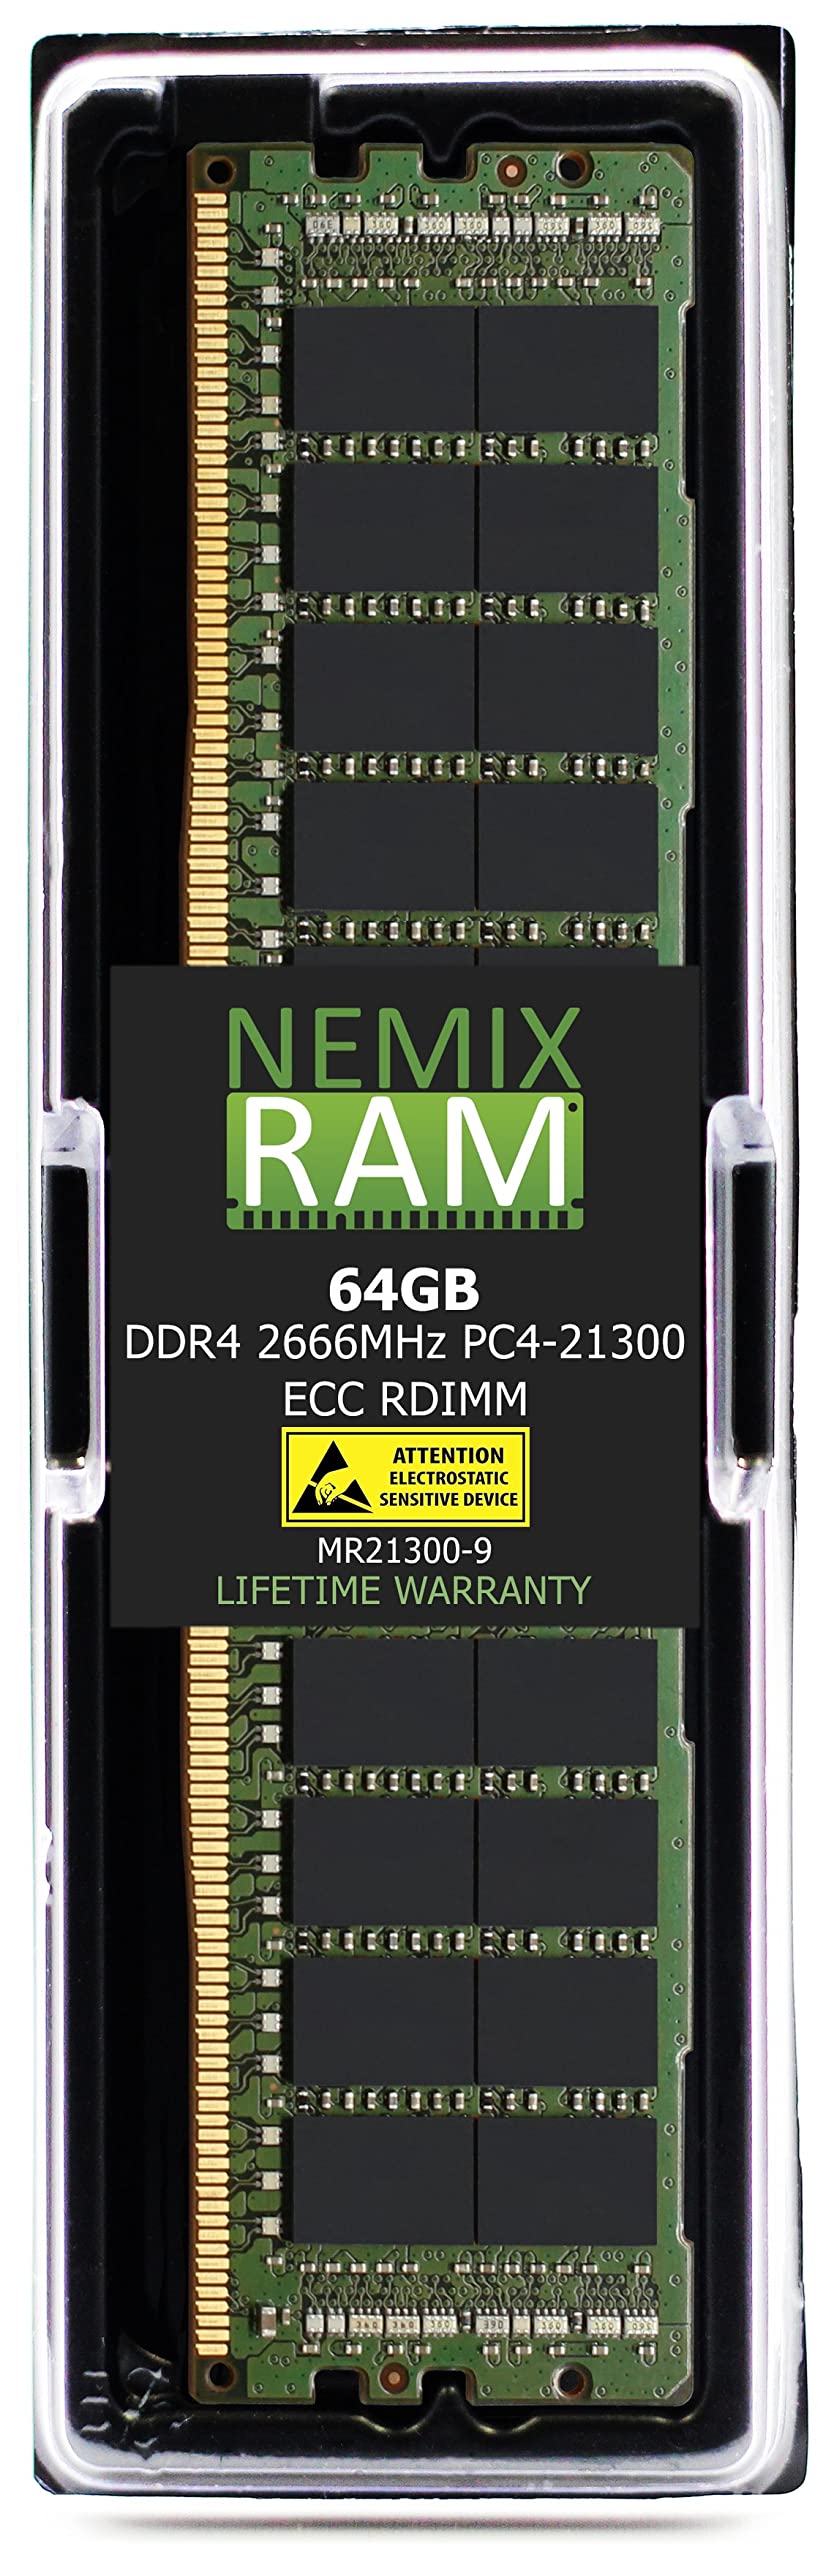 NEMIX RAM 64GB DDR4-21300 PC4-2666 ECC RDIMM レジスタードサーバーメモリアップグレード Dell PowerEdge R540